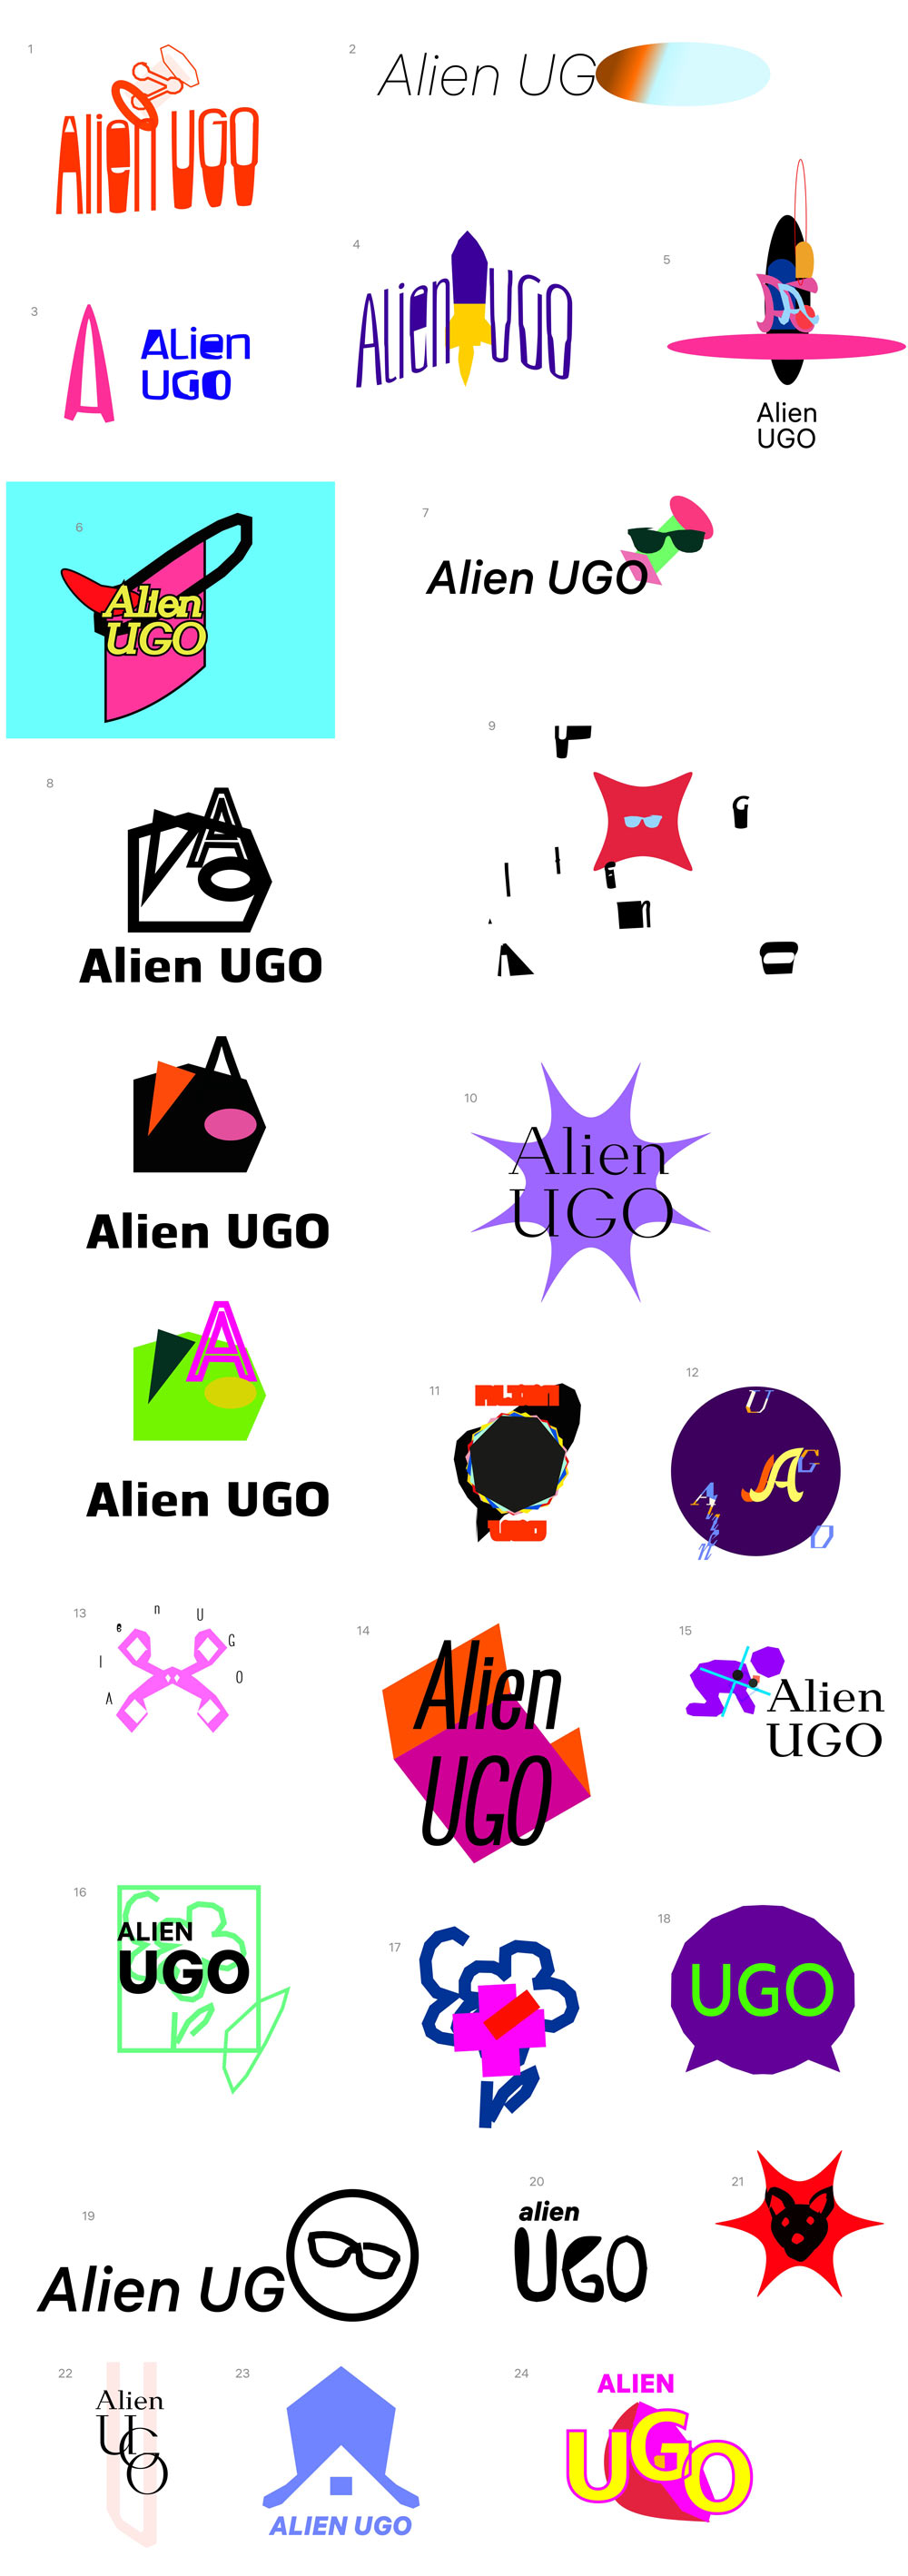 alien ugo process 03